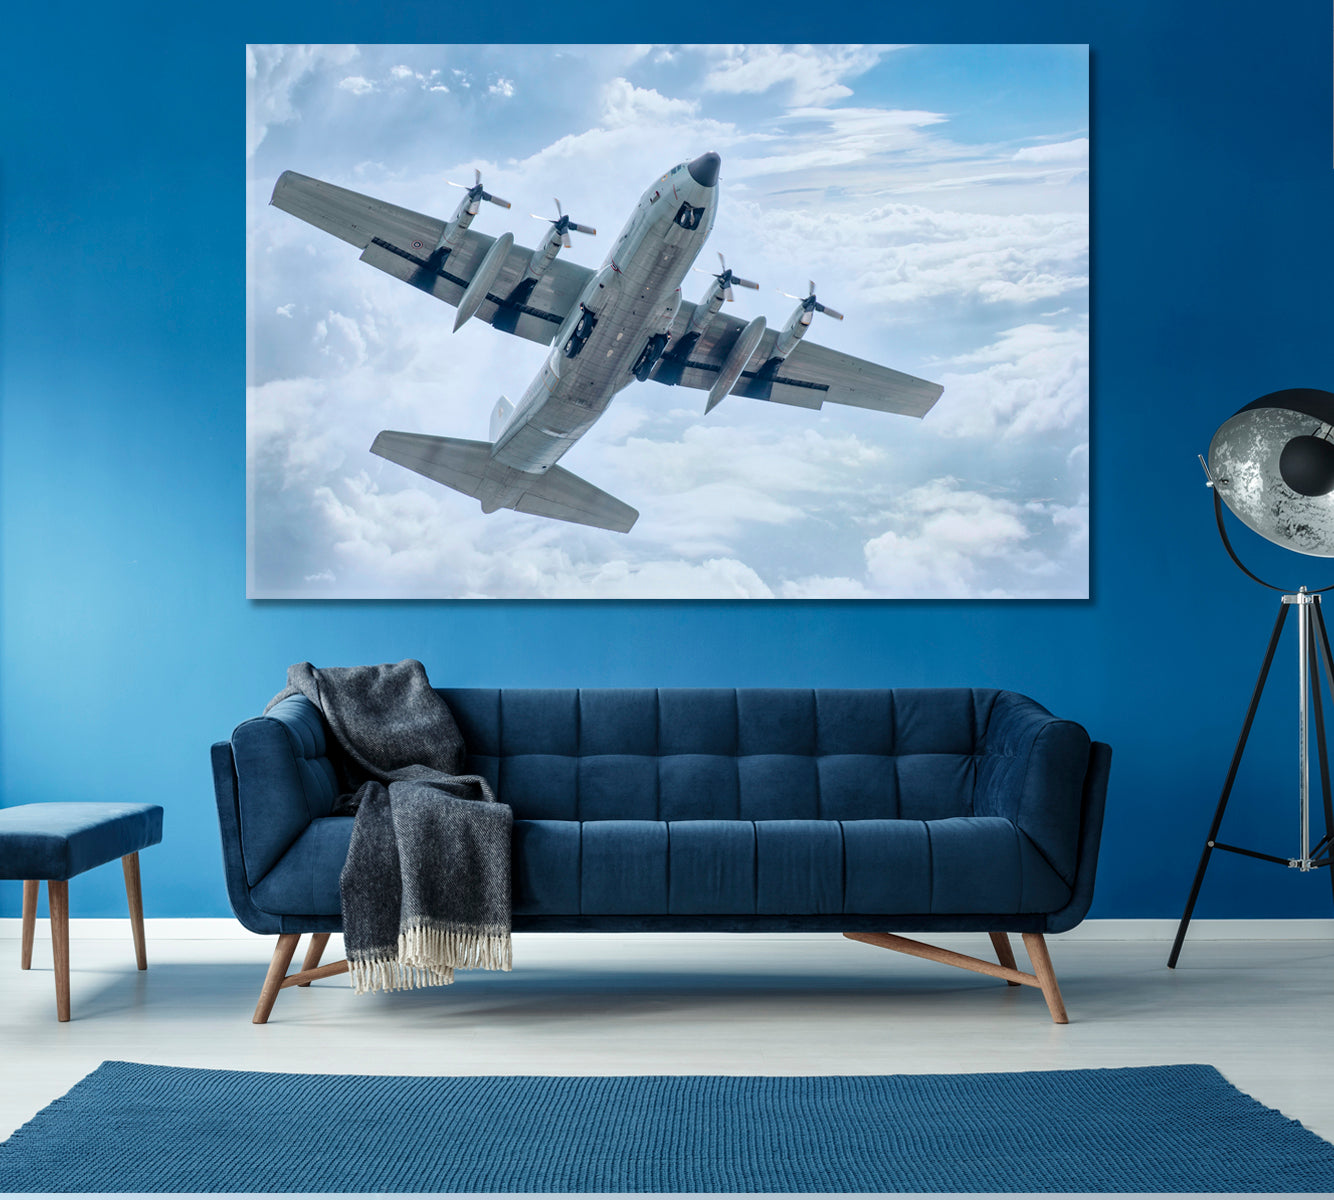 Lockheed C-130 Hercules Military Transport Aircraft Canvas Print ArtLexy 1 Panel 24"x16" inches 